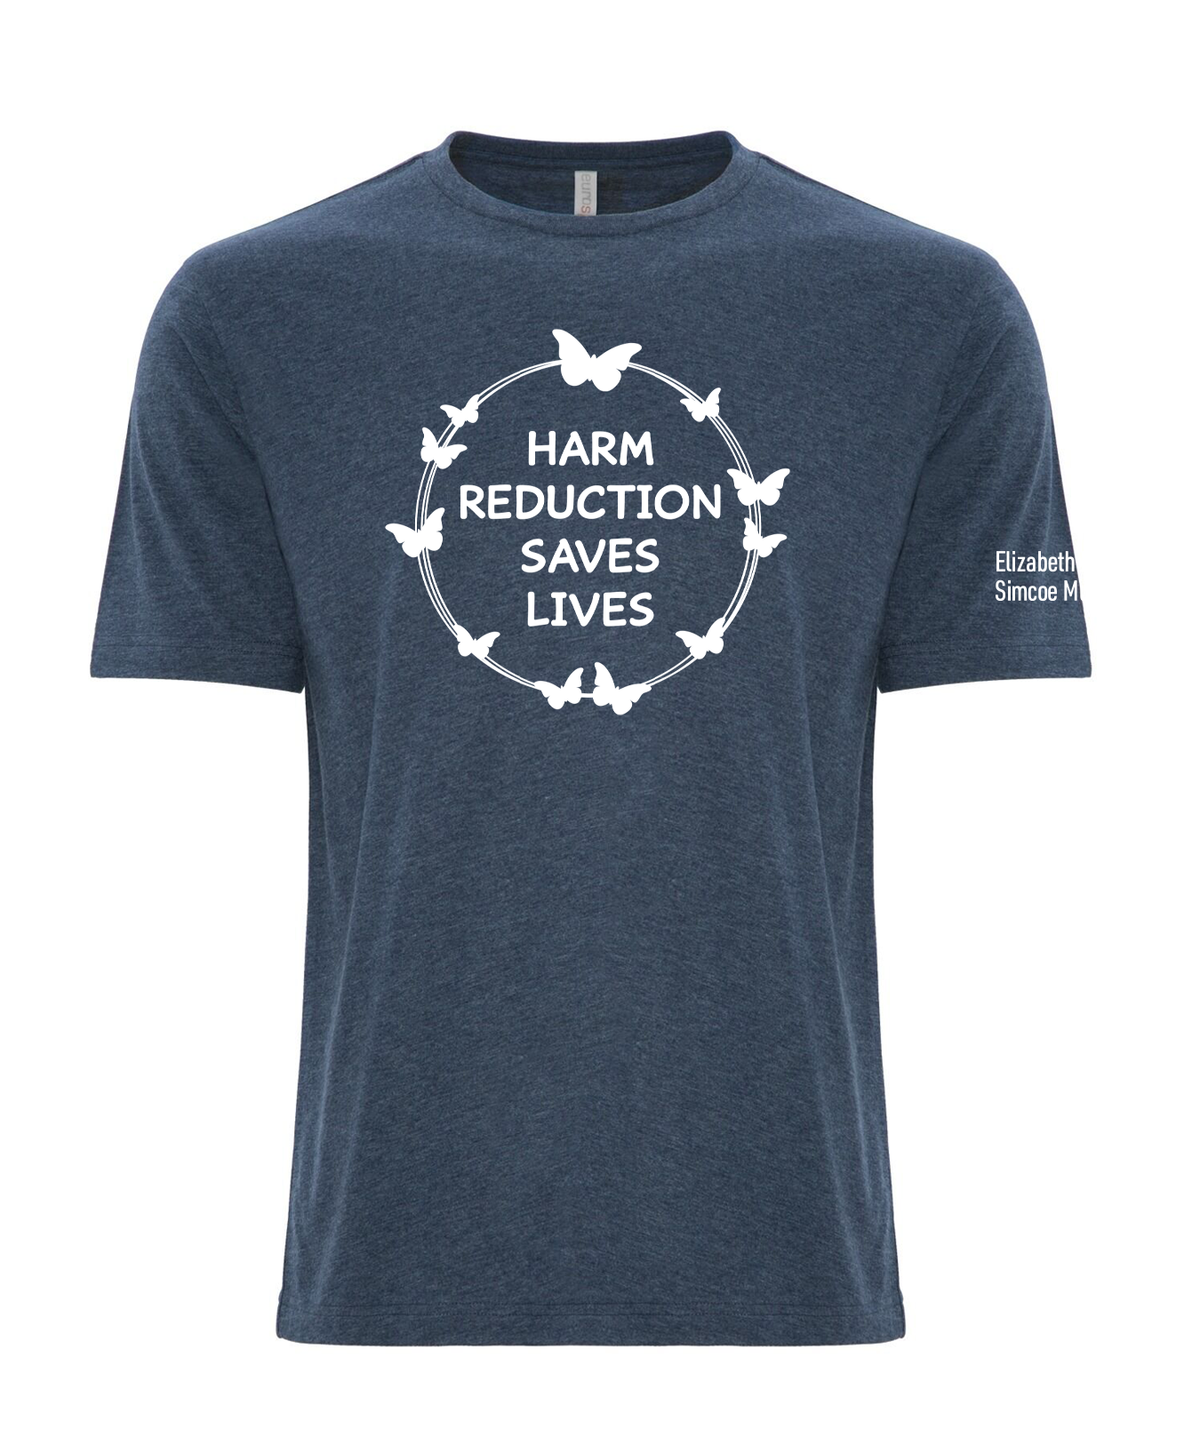 Elizabeth Fry T-Shirt - Harm Reduction Saves Lives